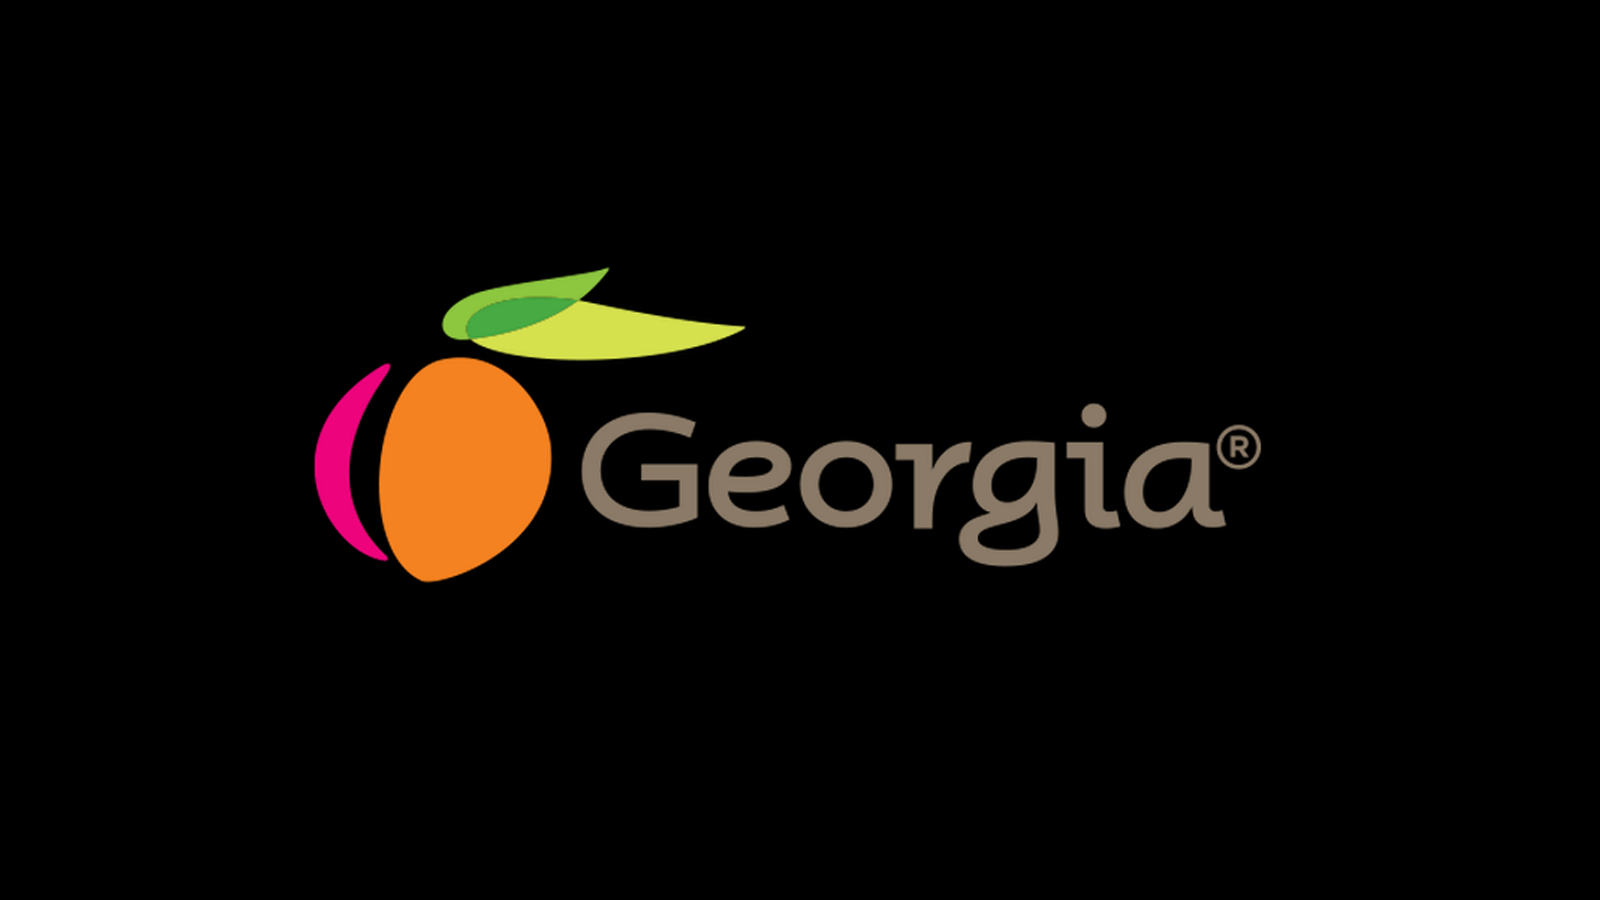 Made in Georgia logo